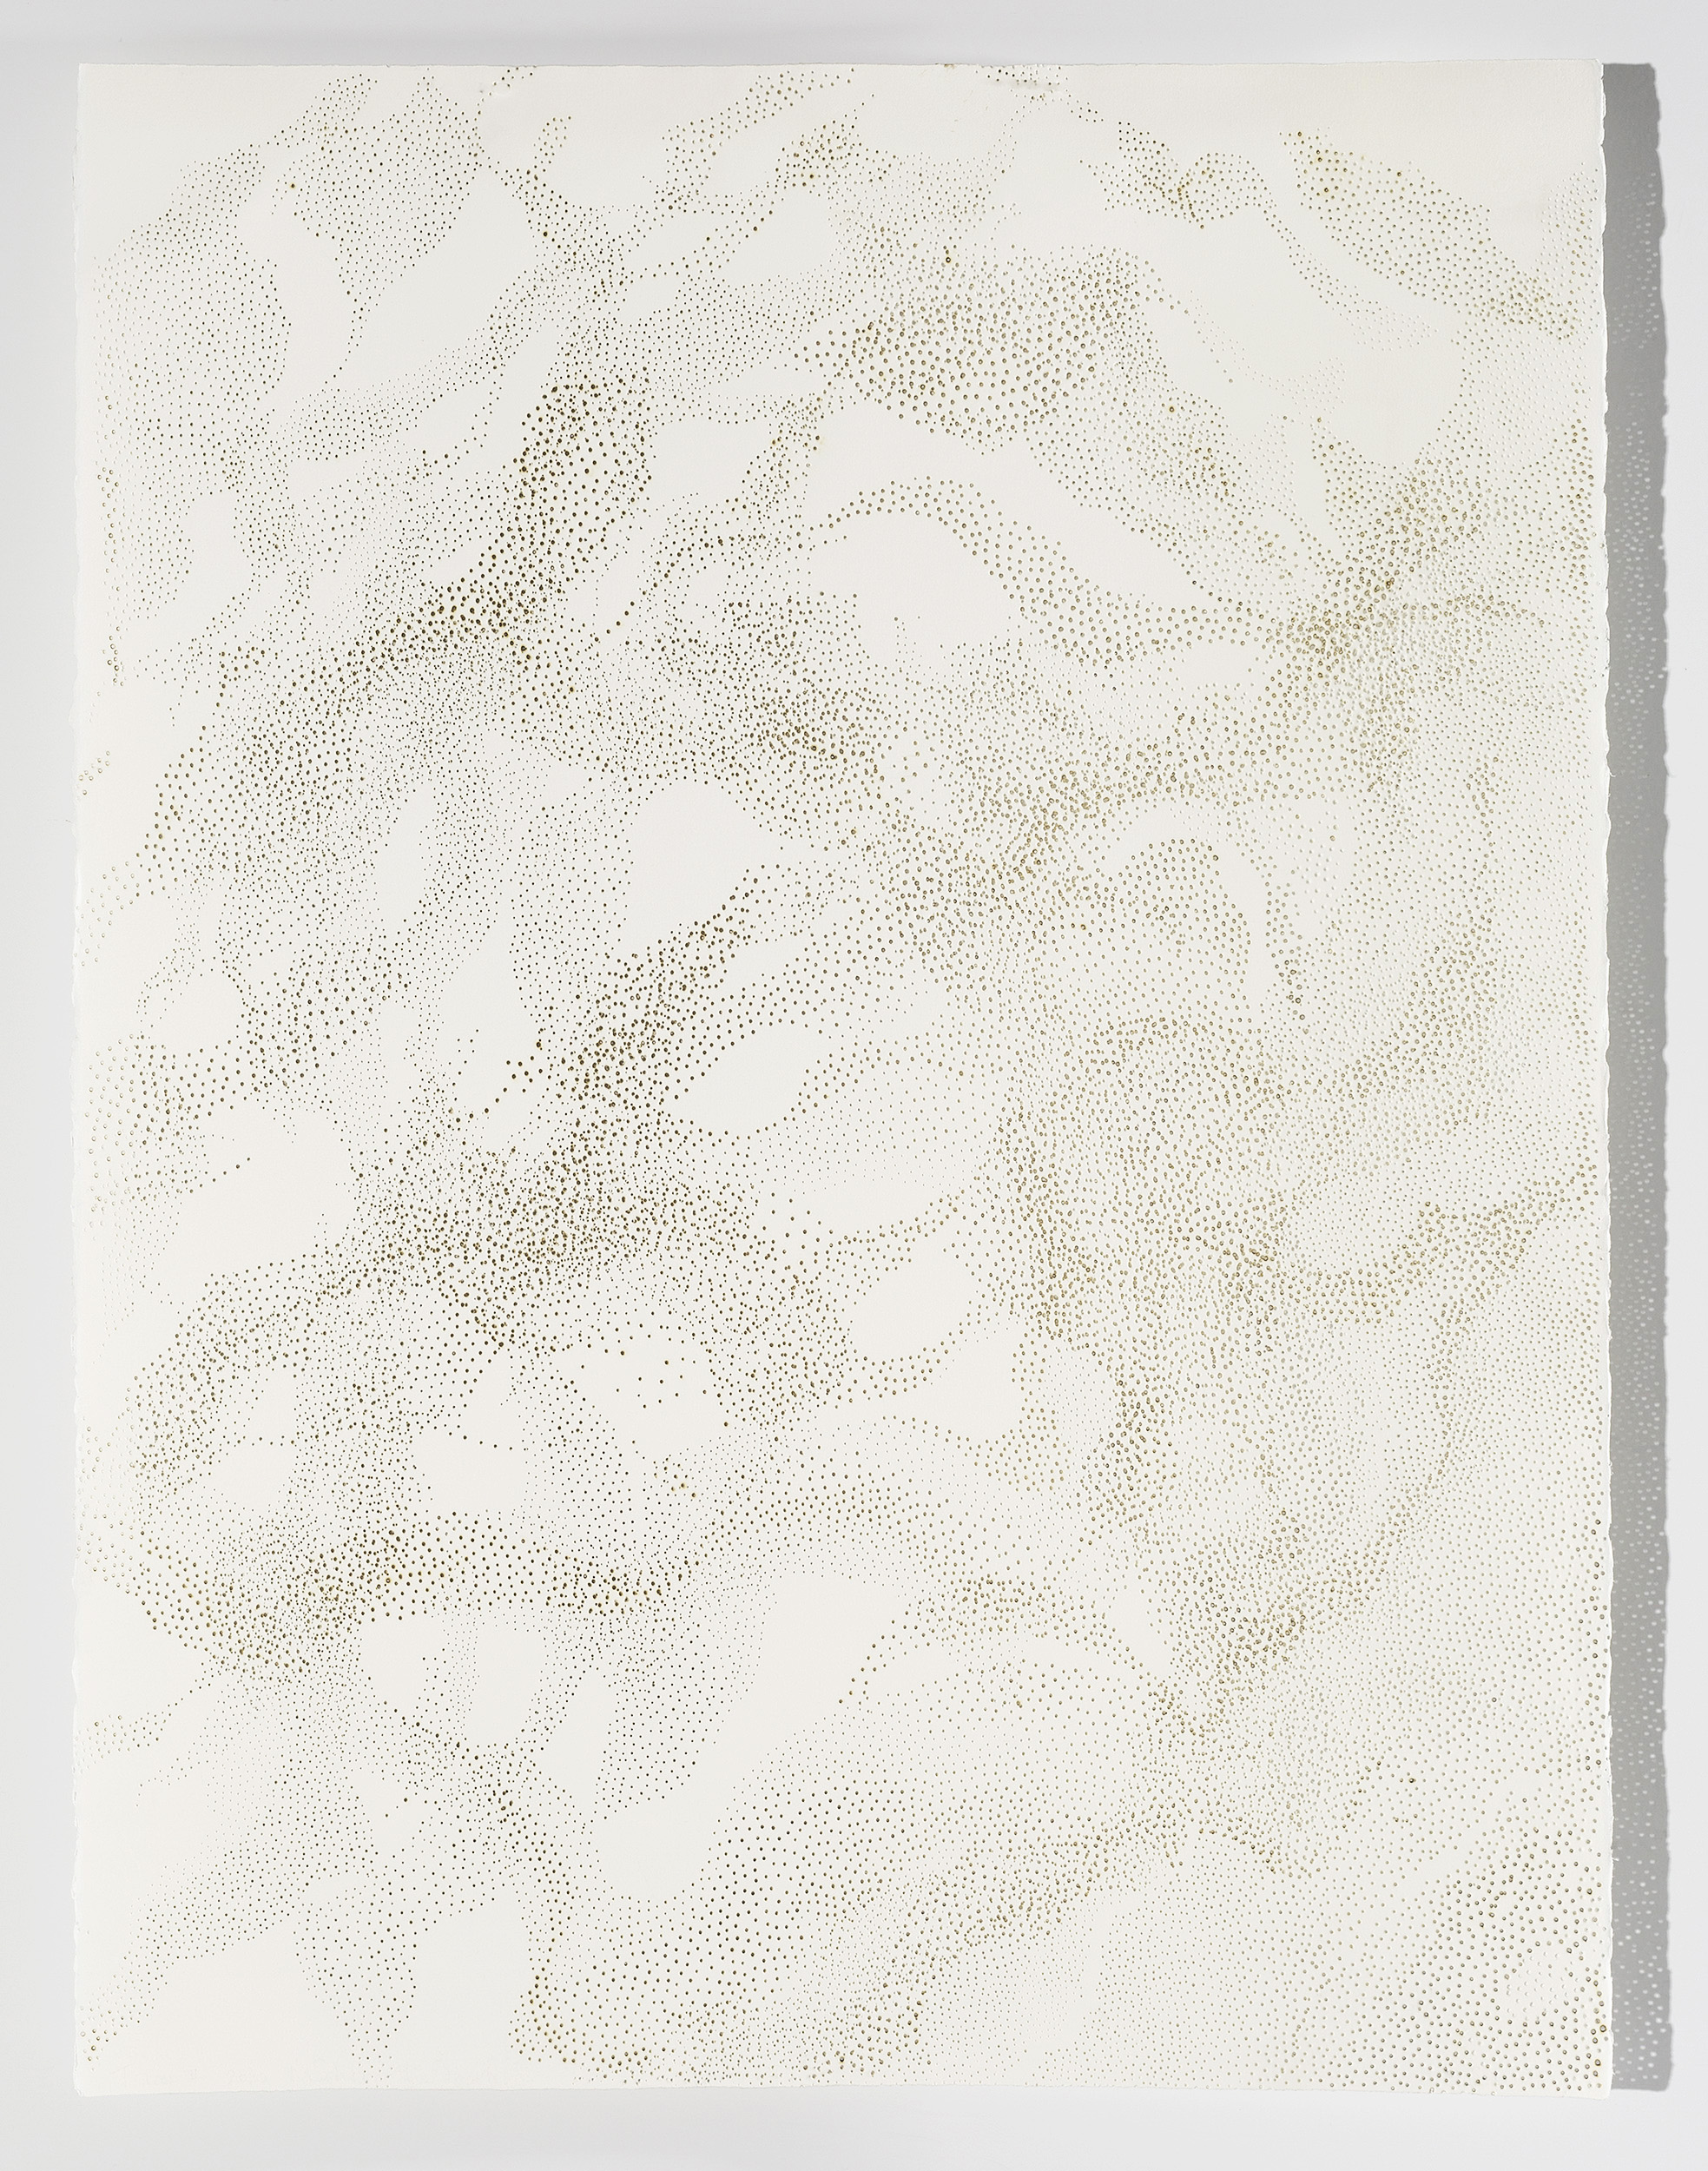 Melinda Schawel 'Traces III' perforated paper 76 x 57cm $3,800